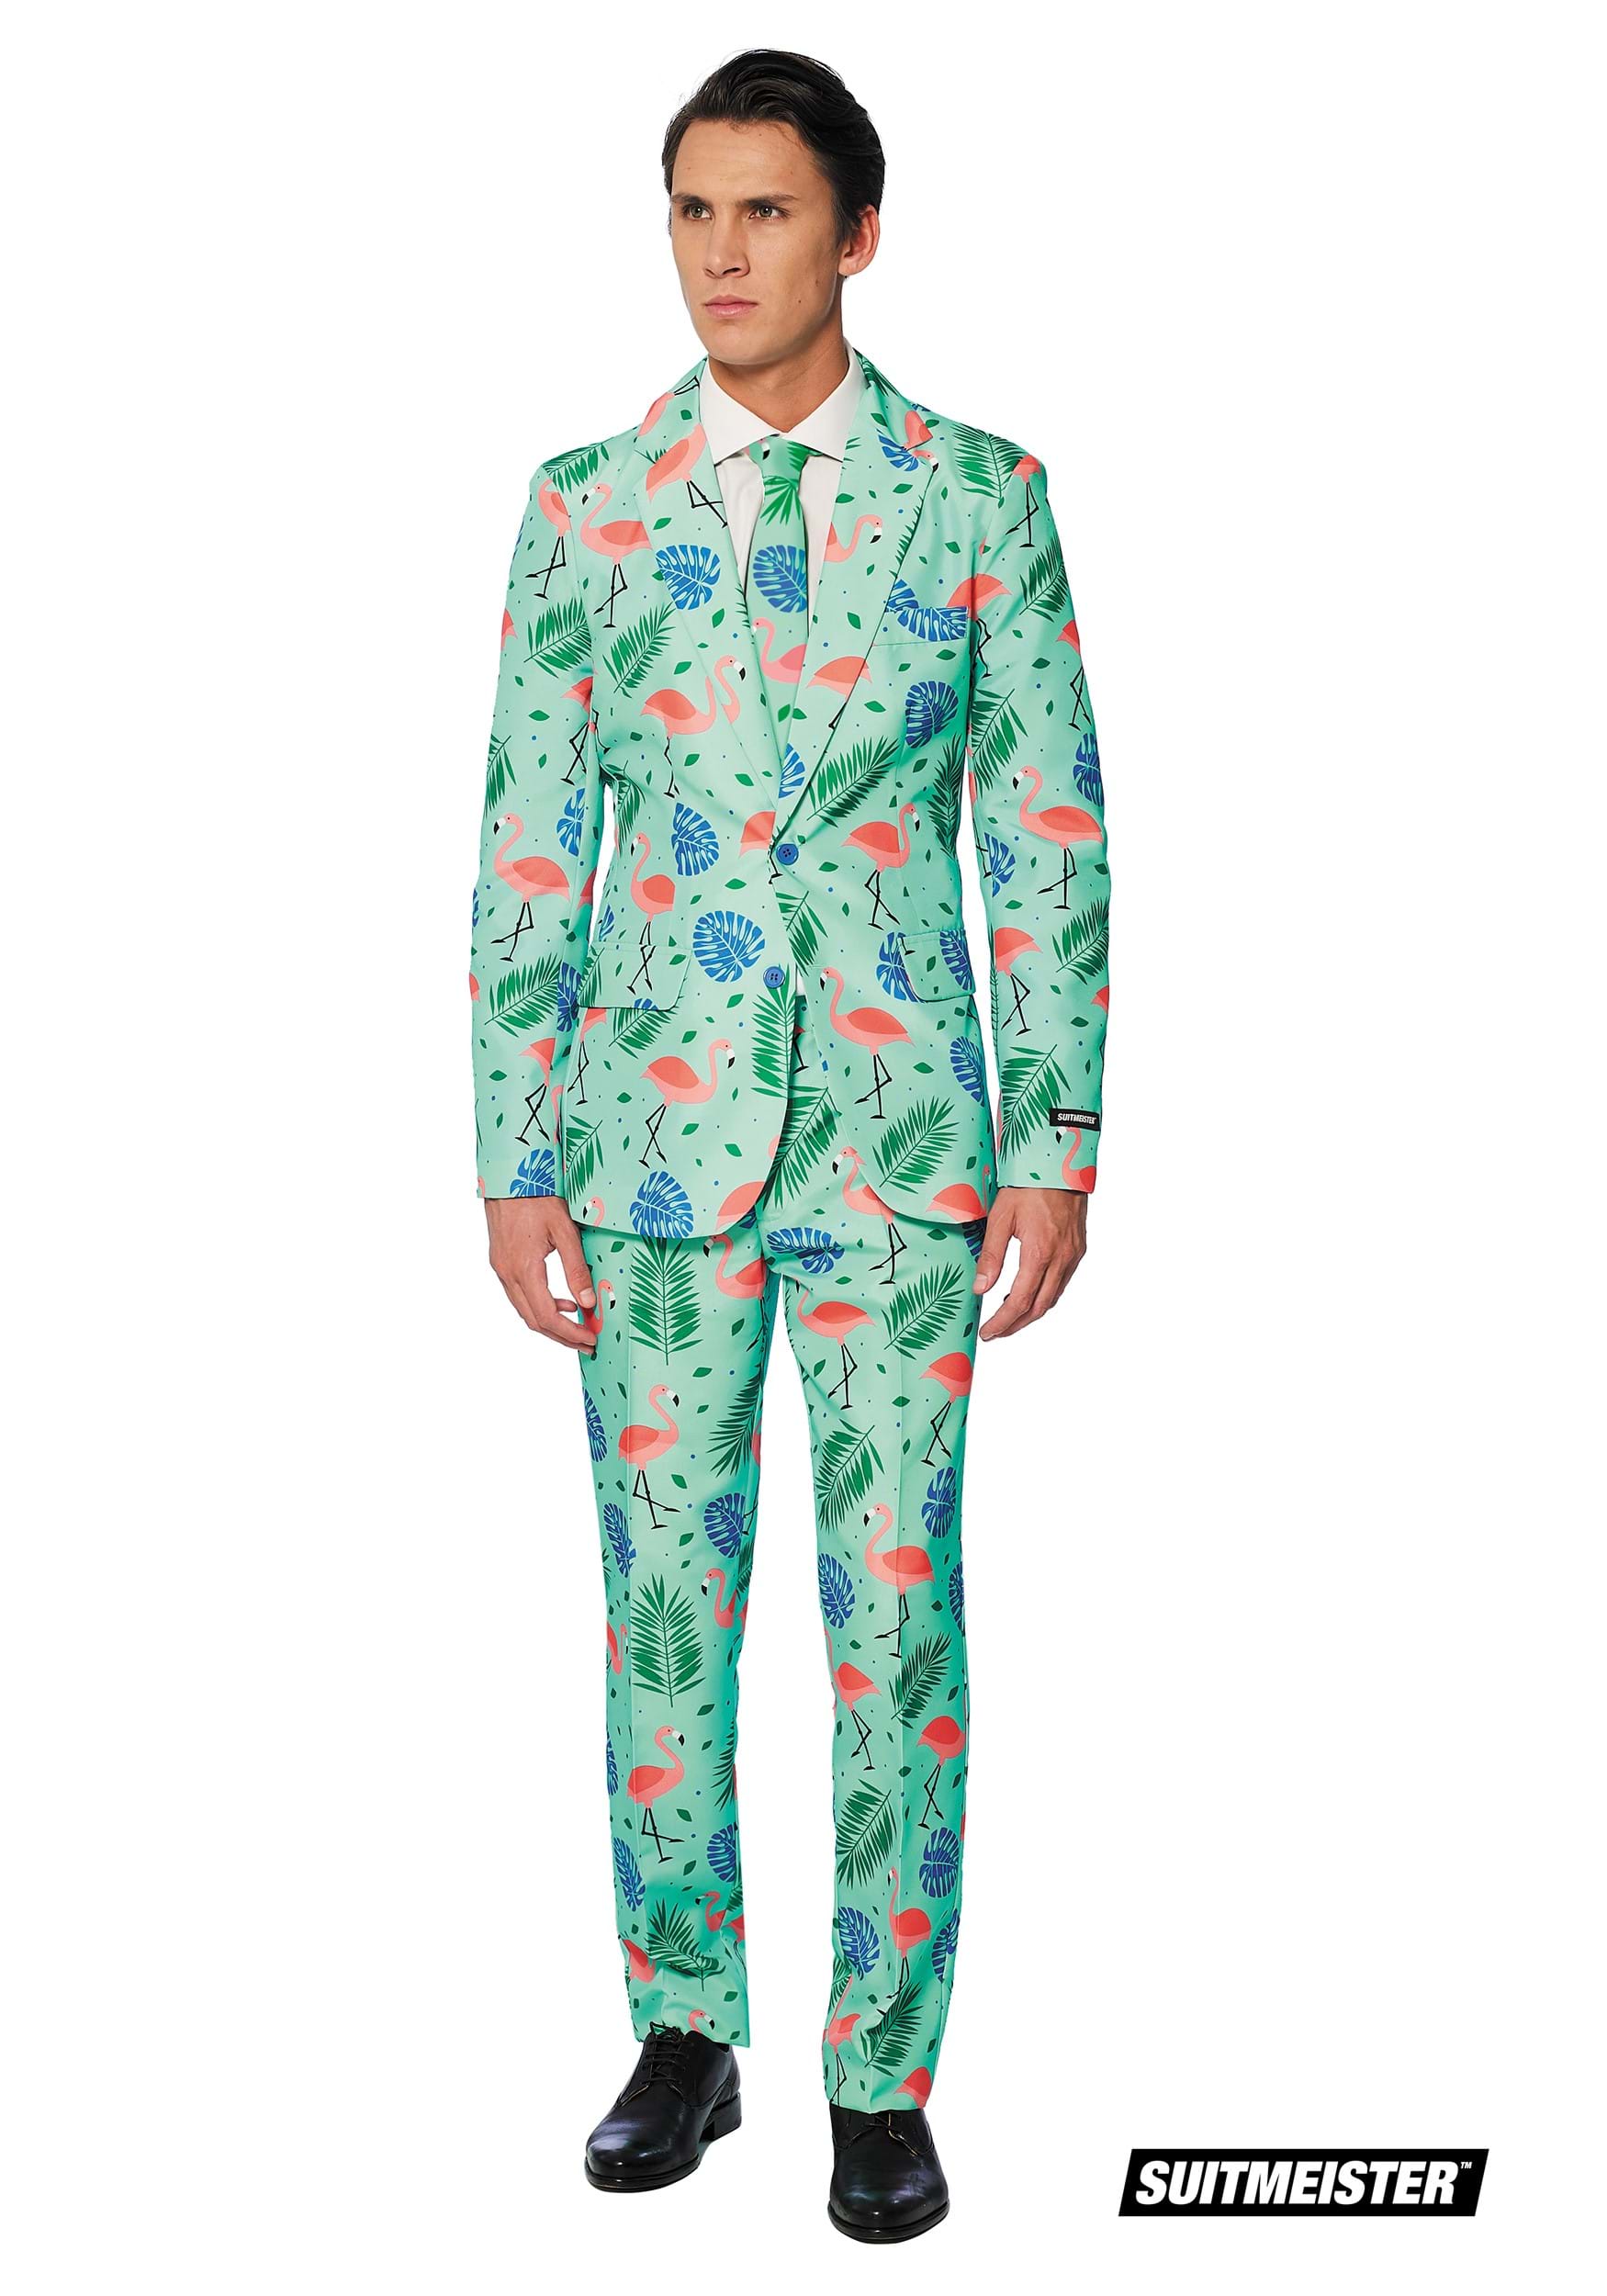 Men’s Tropical Suitmeister Suit Costume